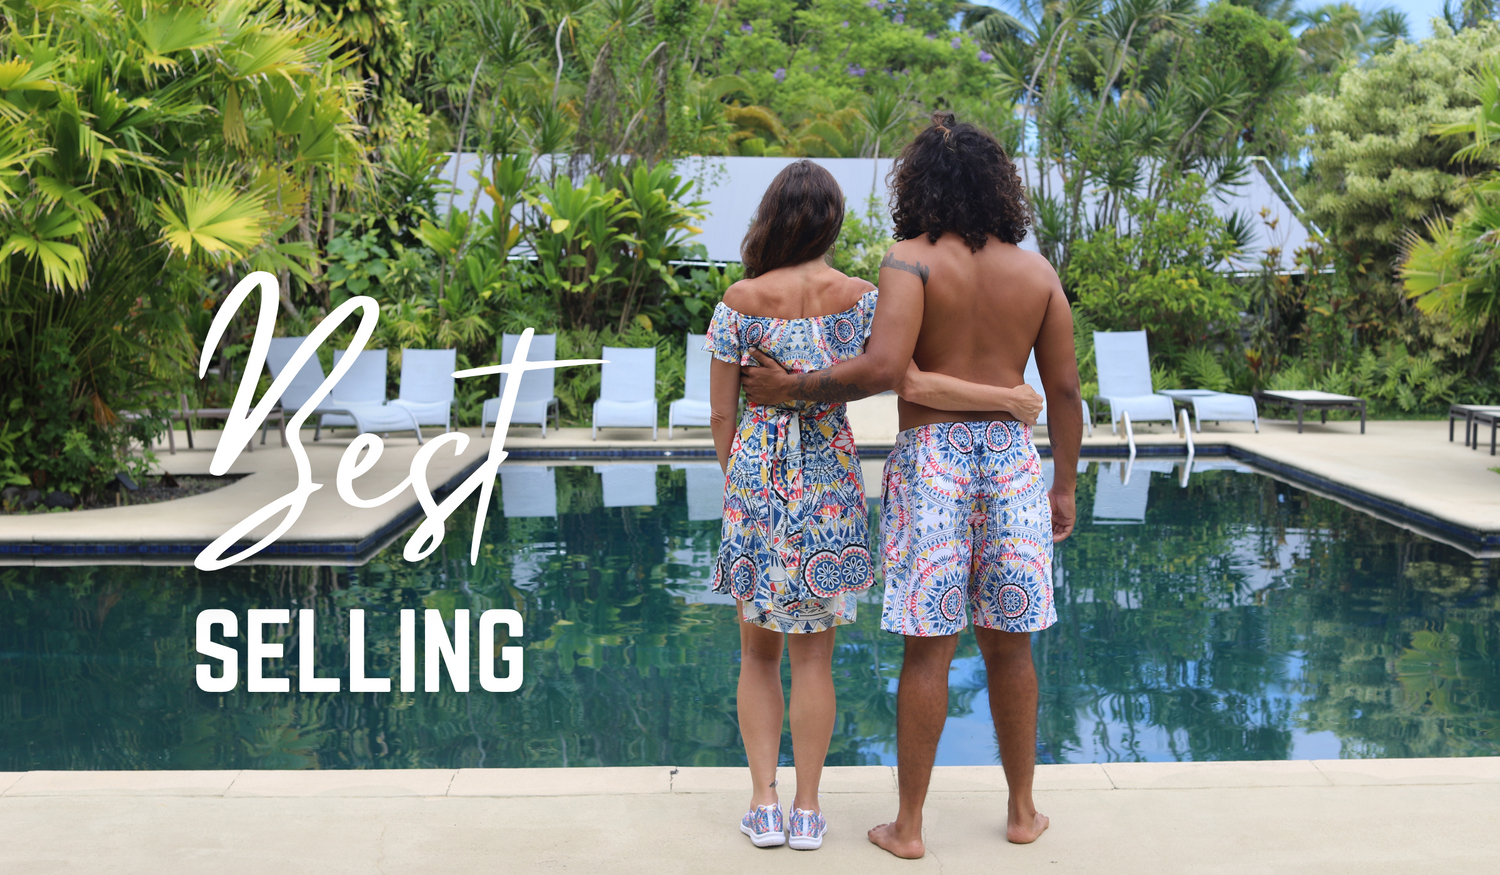 Best Selling Tropical Print Activewear, Beachwear, Swimwear Brand for the Family - The Landing World